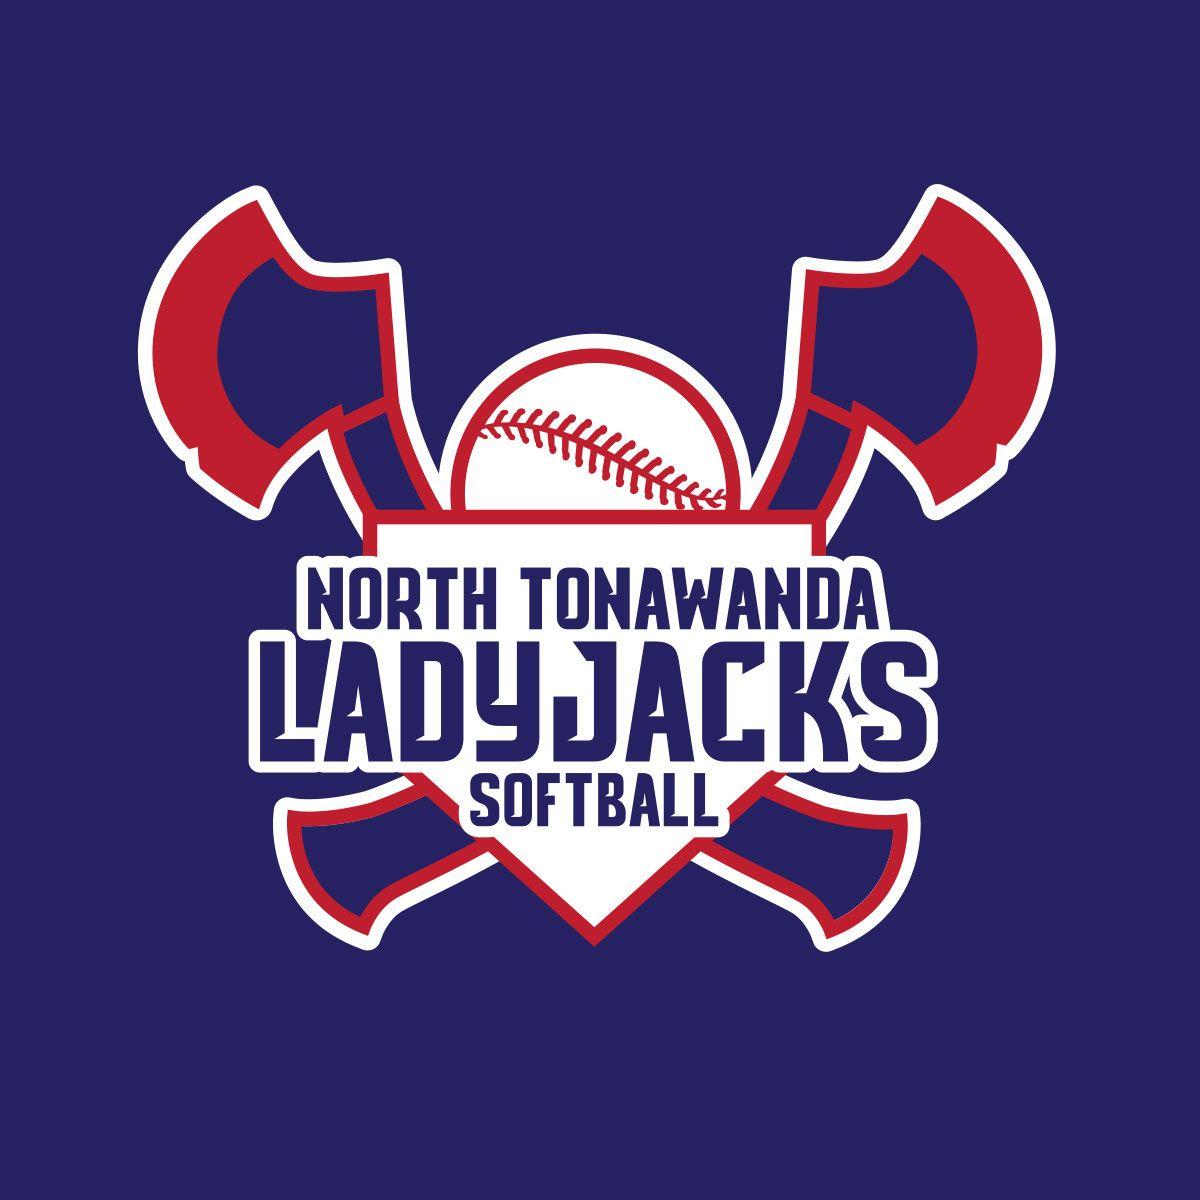 Softball Bar Logo - michelle maggard - North Tonawanda Lady Jacks Softball